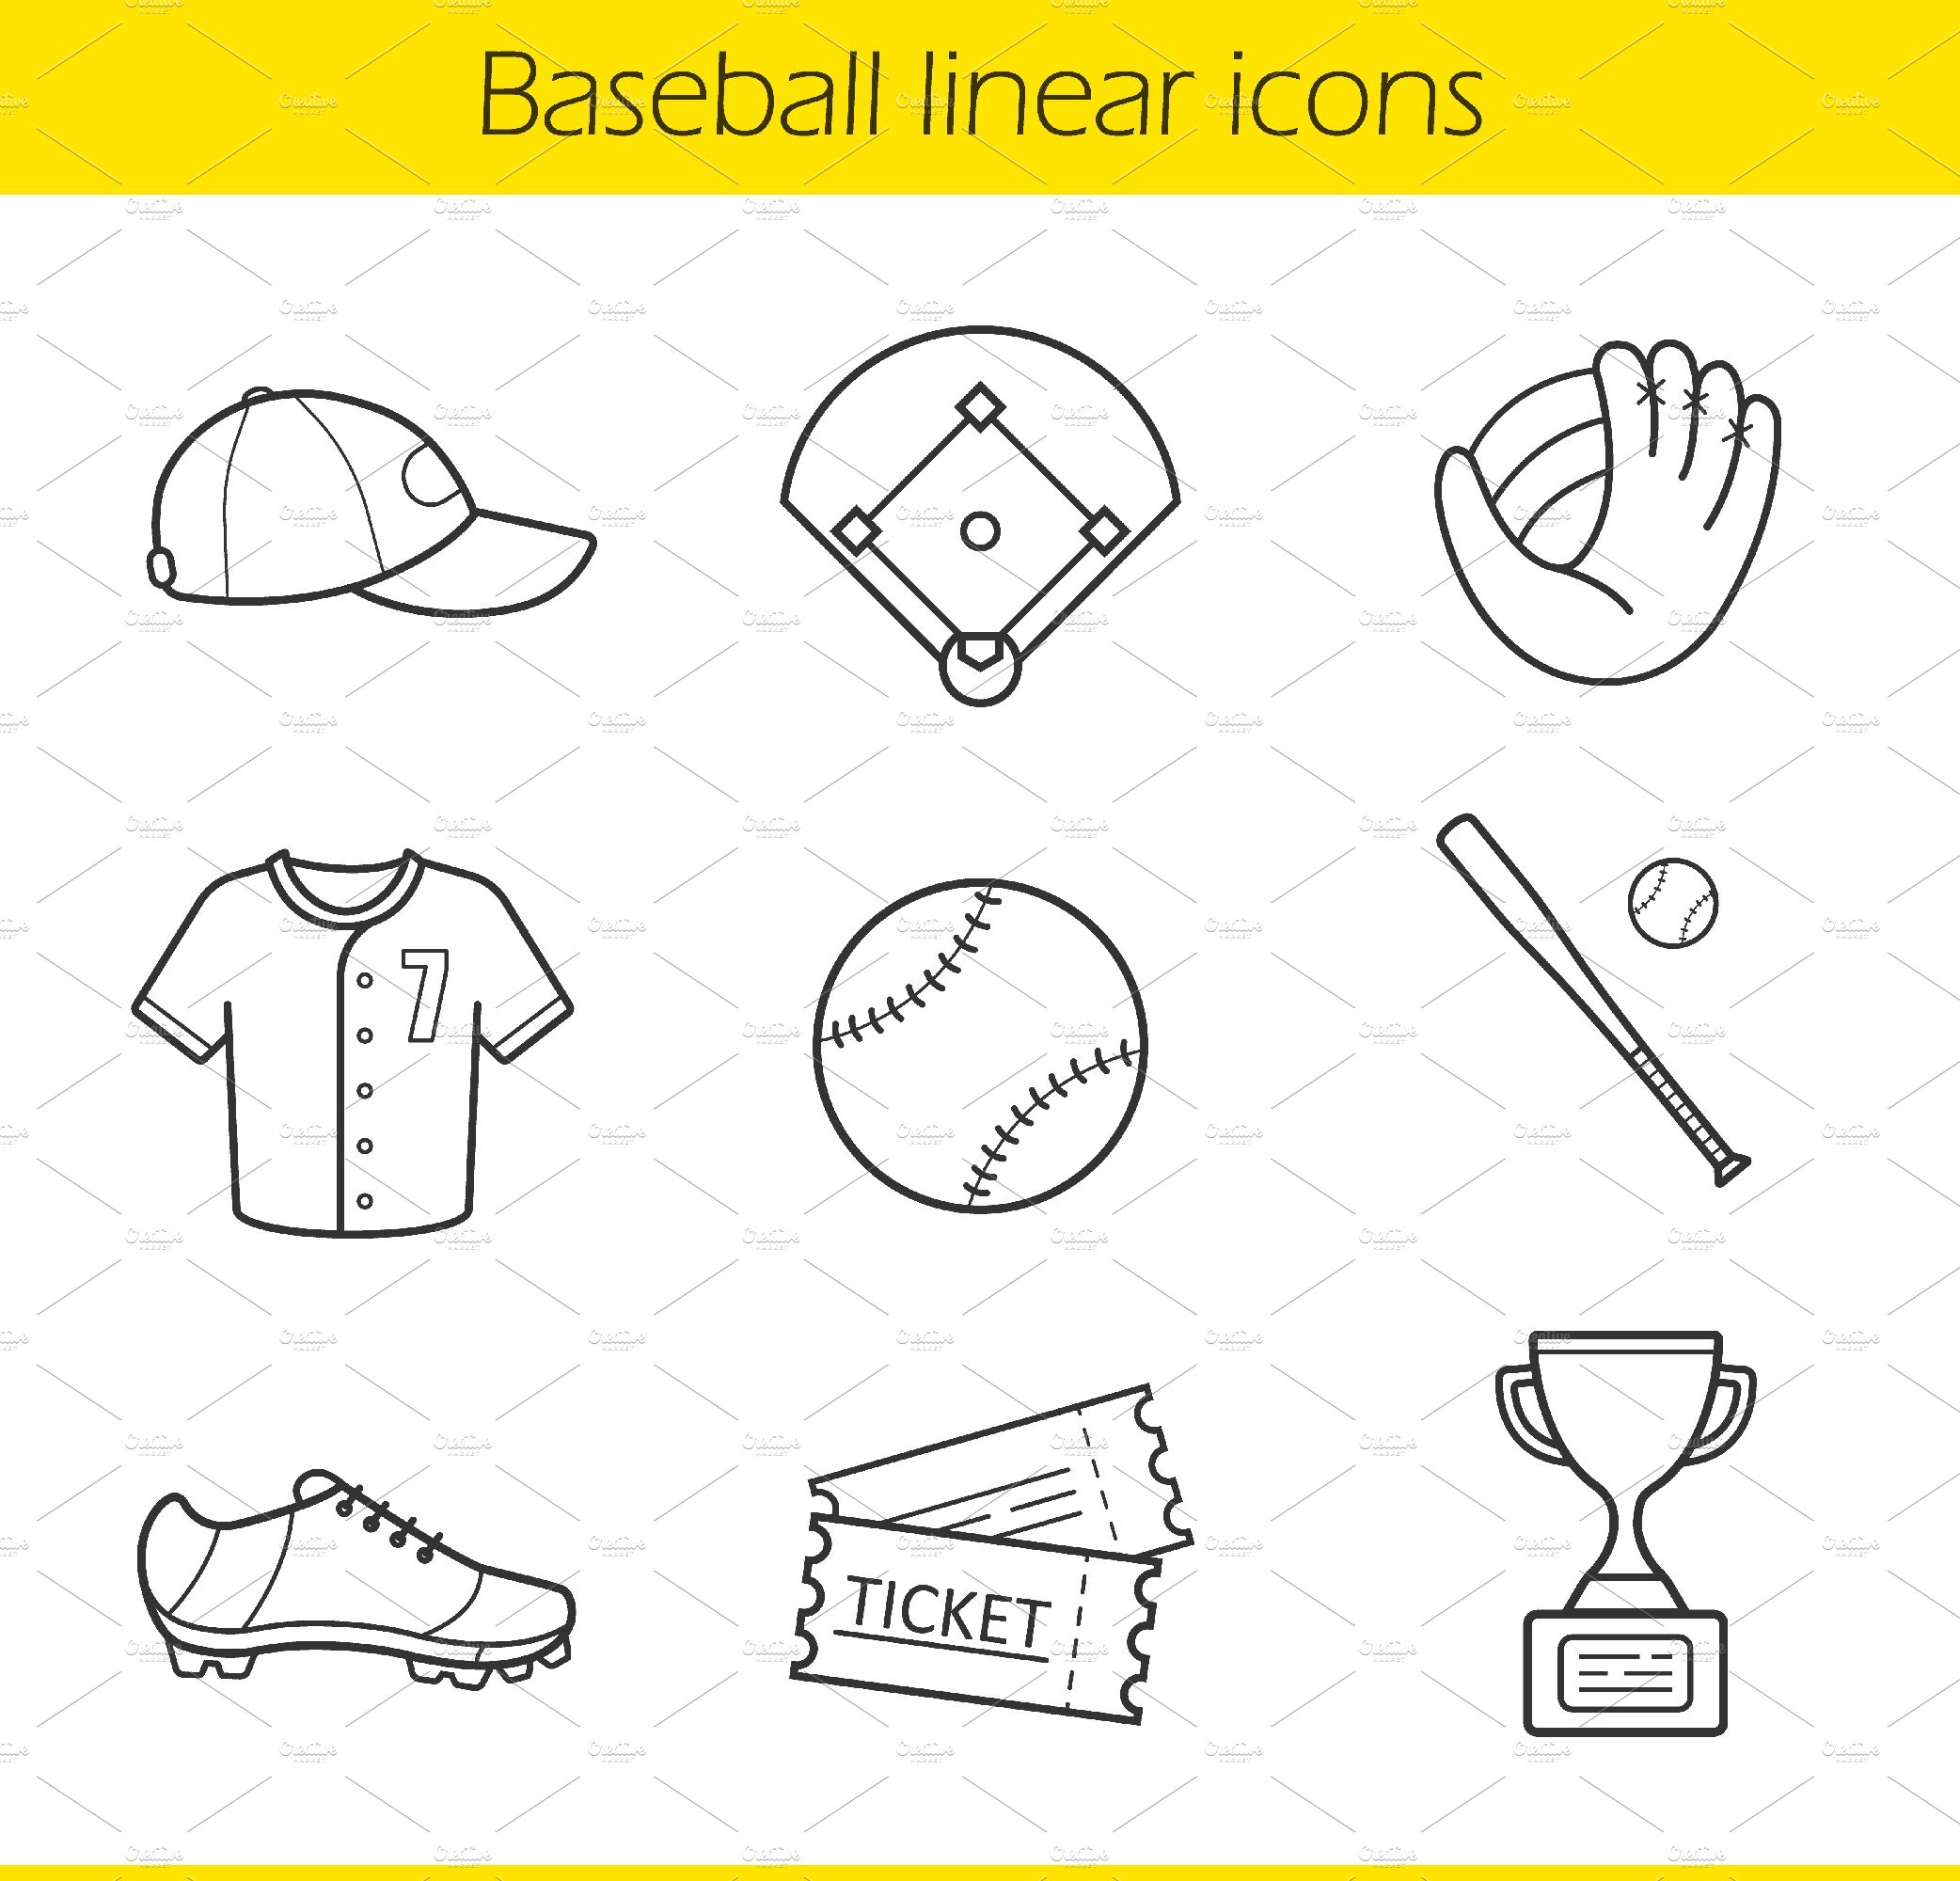 Baseball icons. Vector cover image.